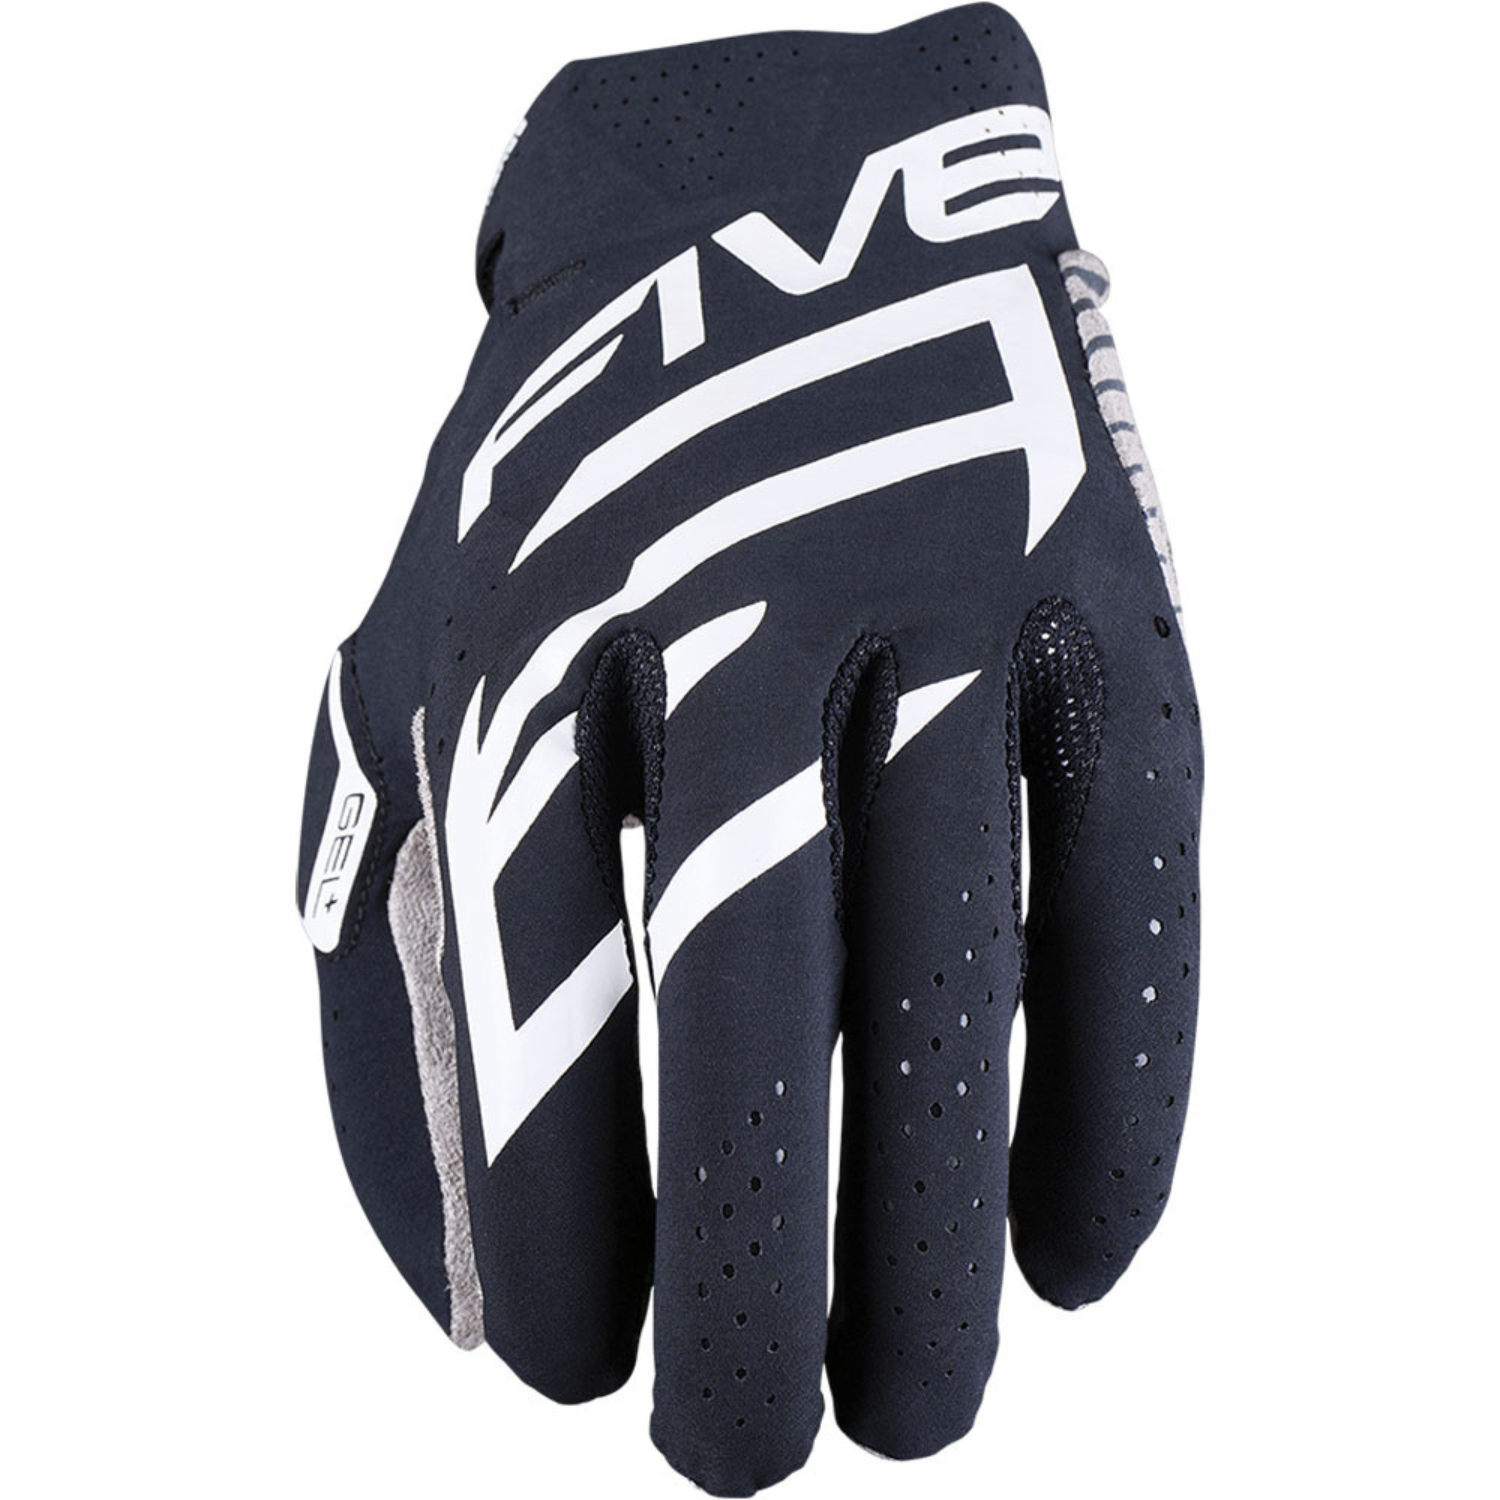 Image of Five MXF Race Gloves Black White Größe S